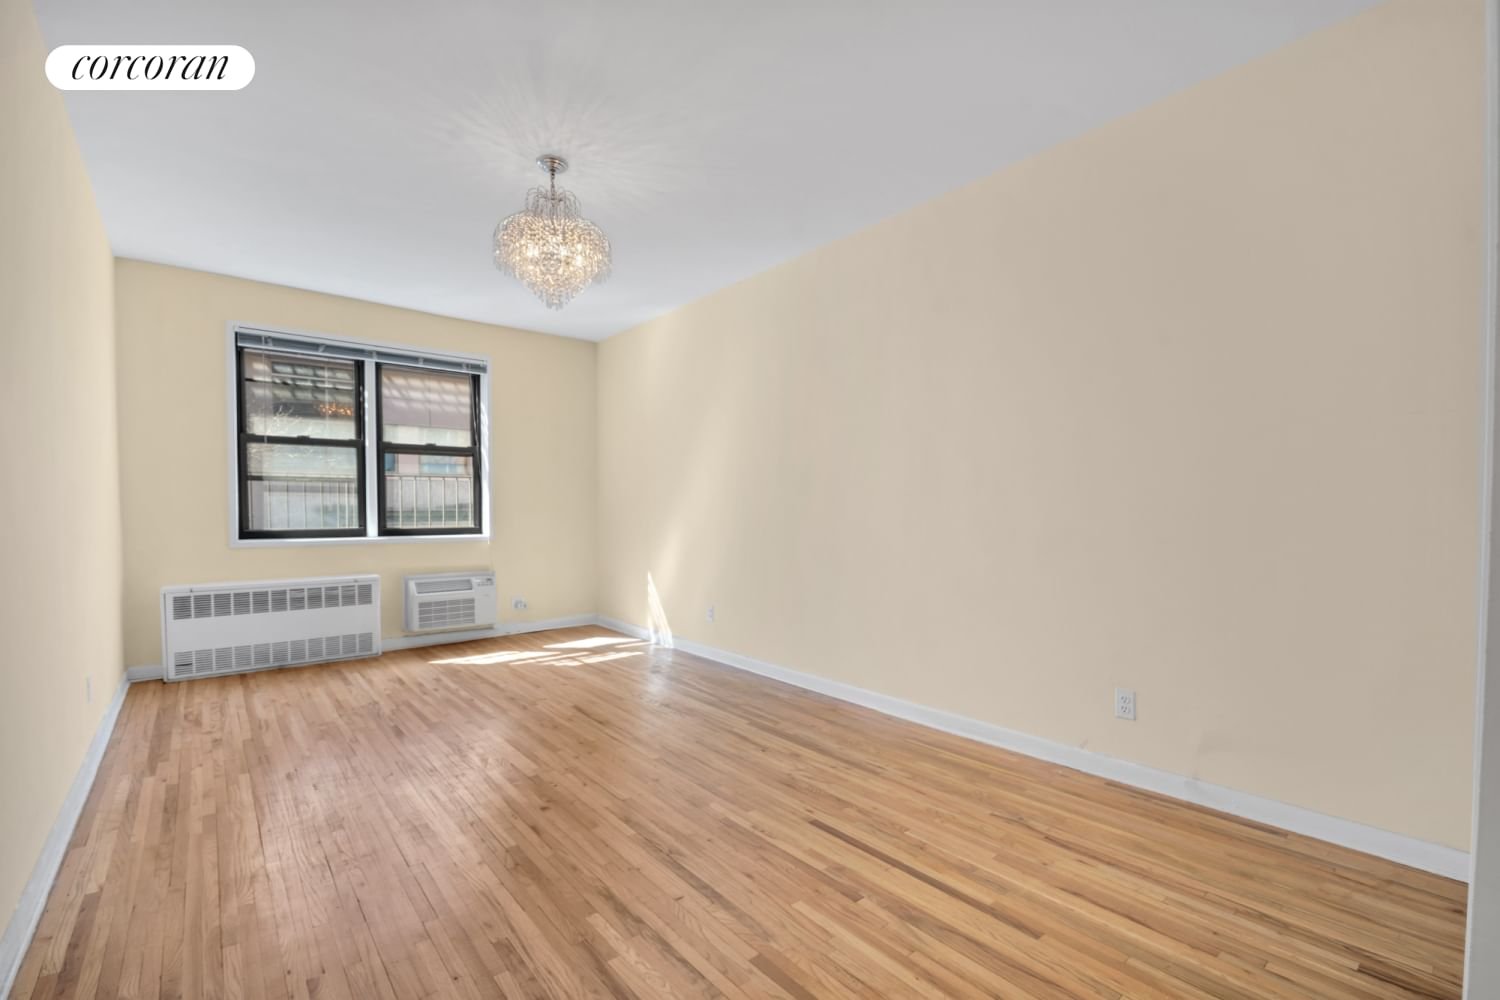 Real estate property located at 317 54th #2E, New York, New York City, NY